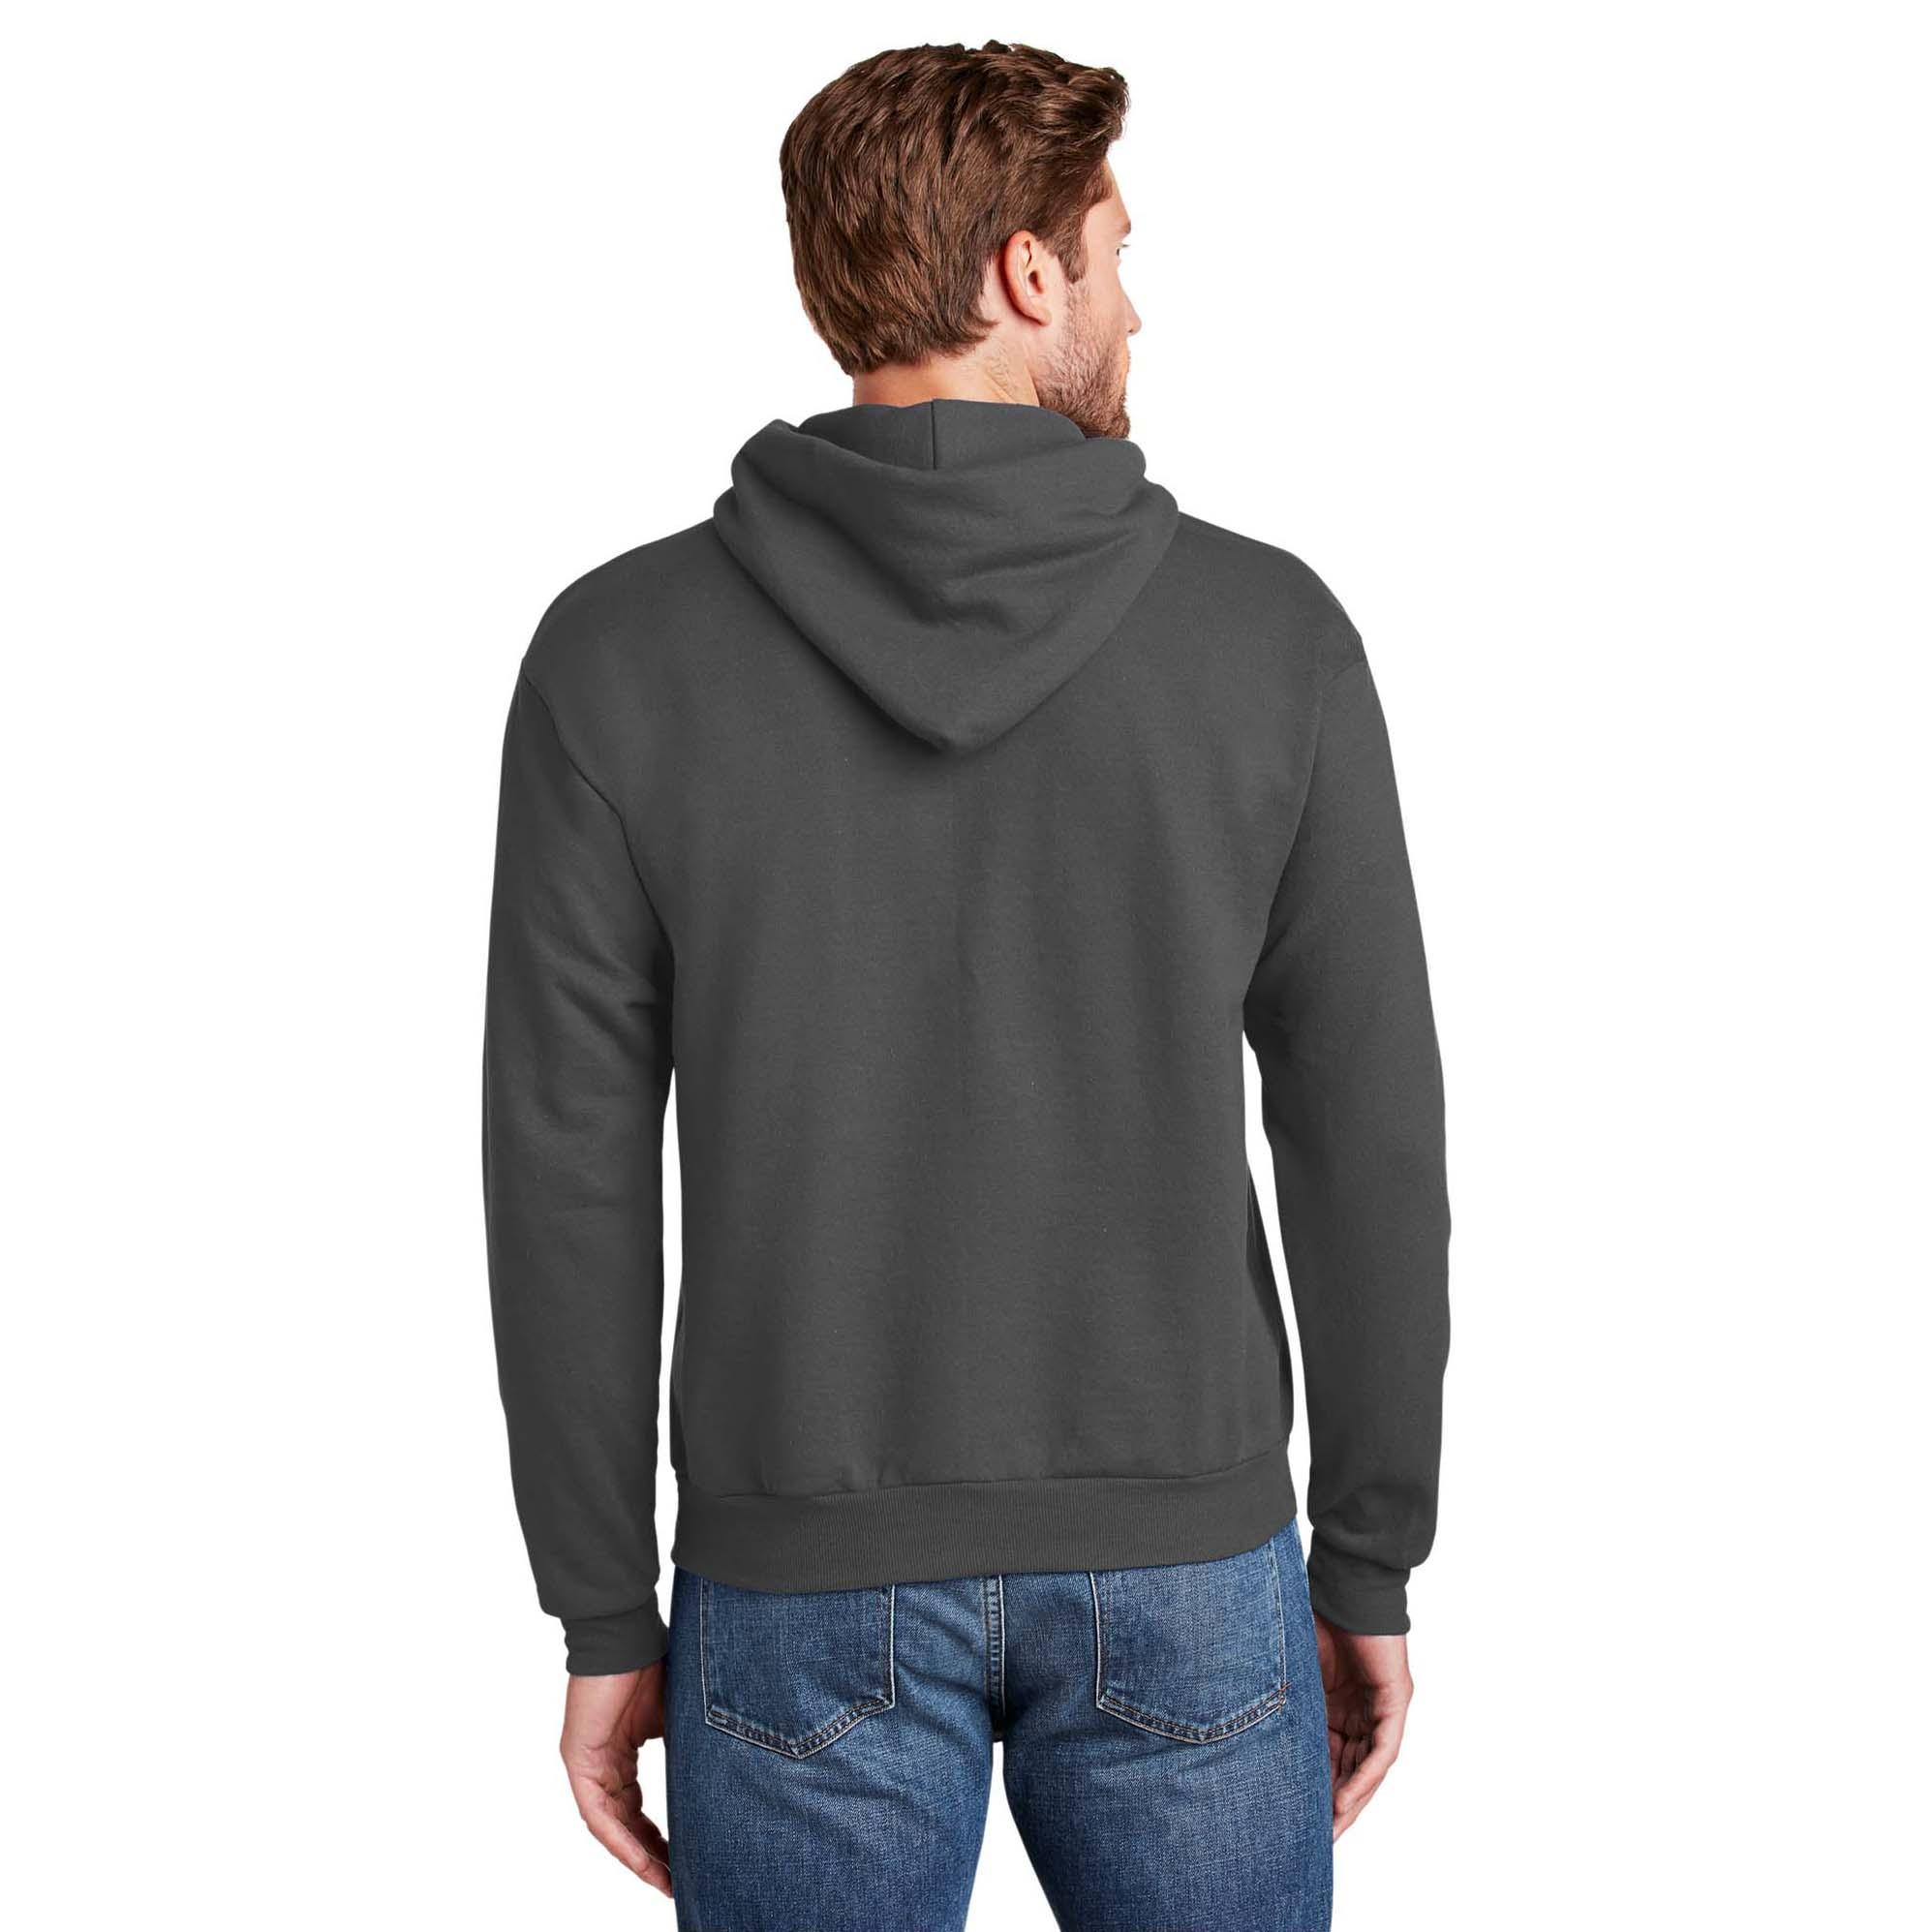 Hanes P170 EcoSmart Pullover Hooded Sweatshirt - Smoke Grey | Full Source